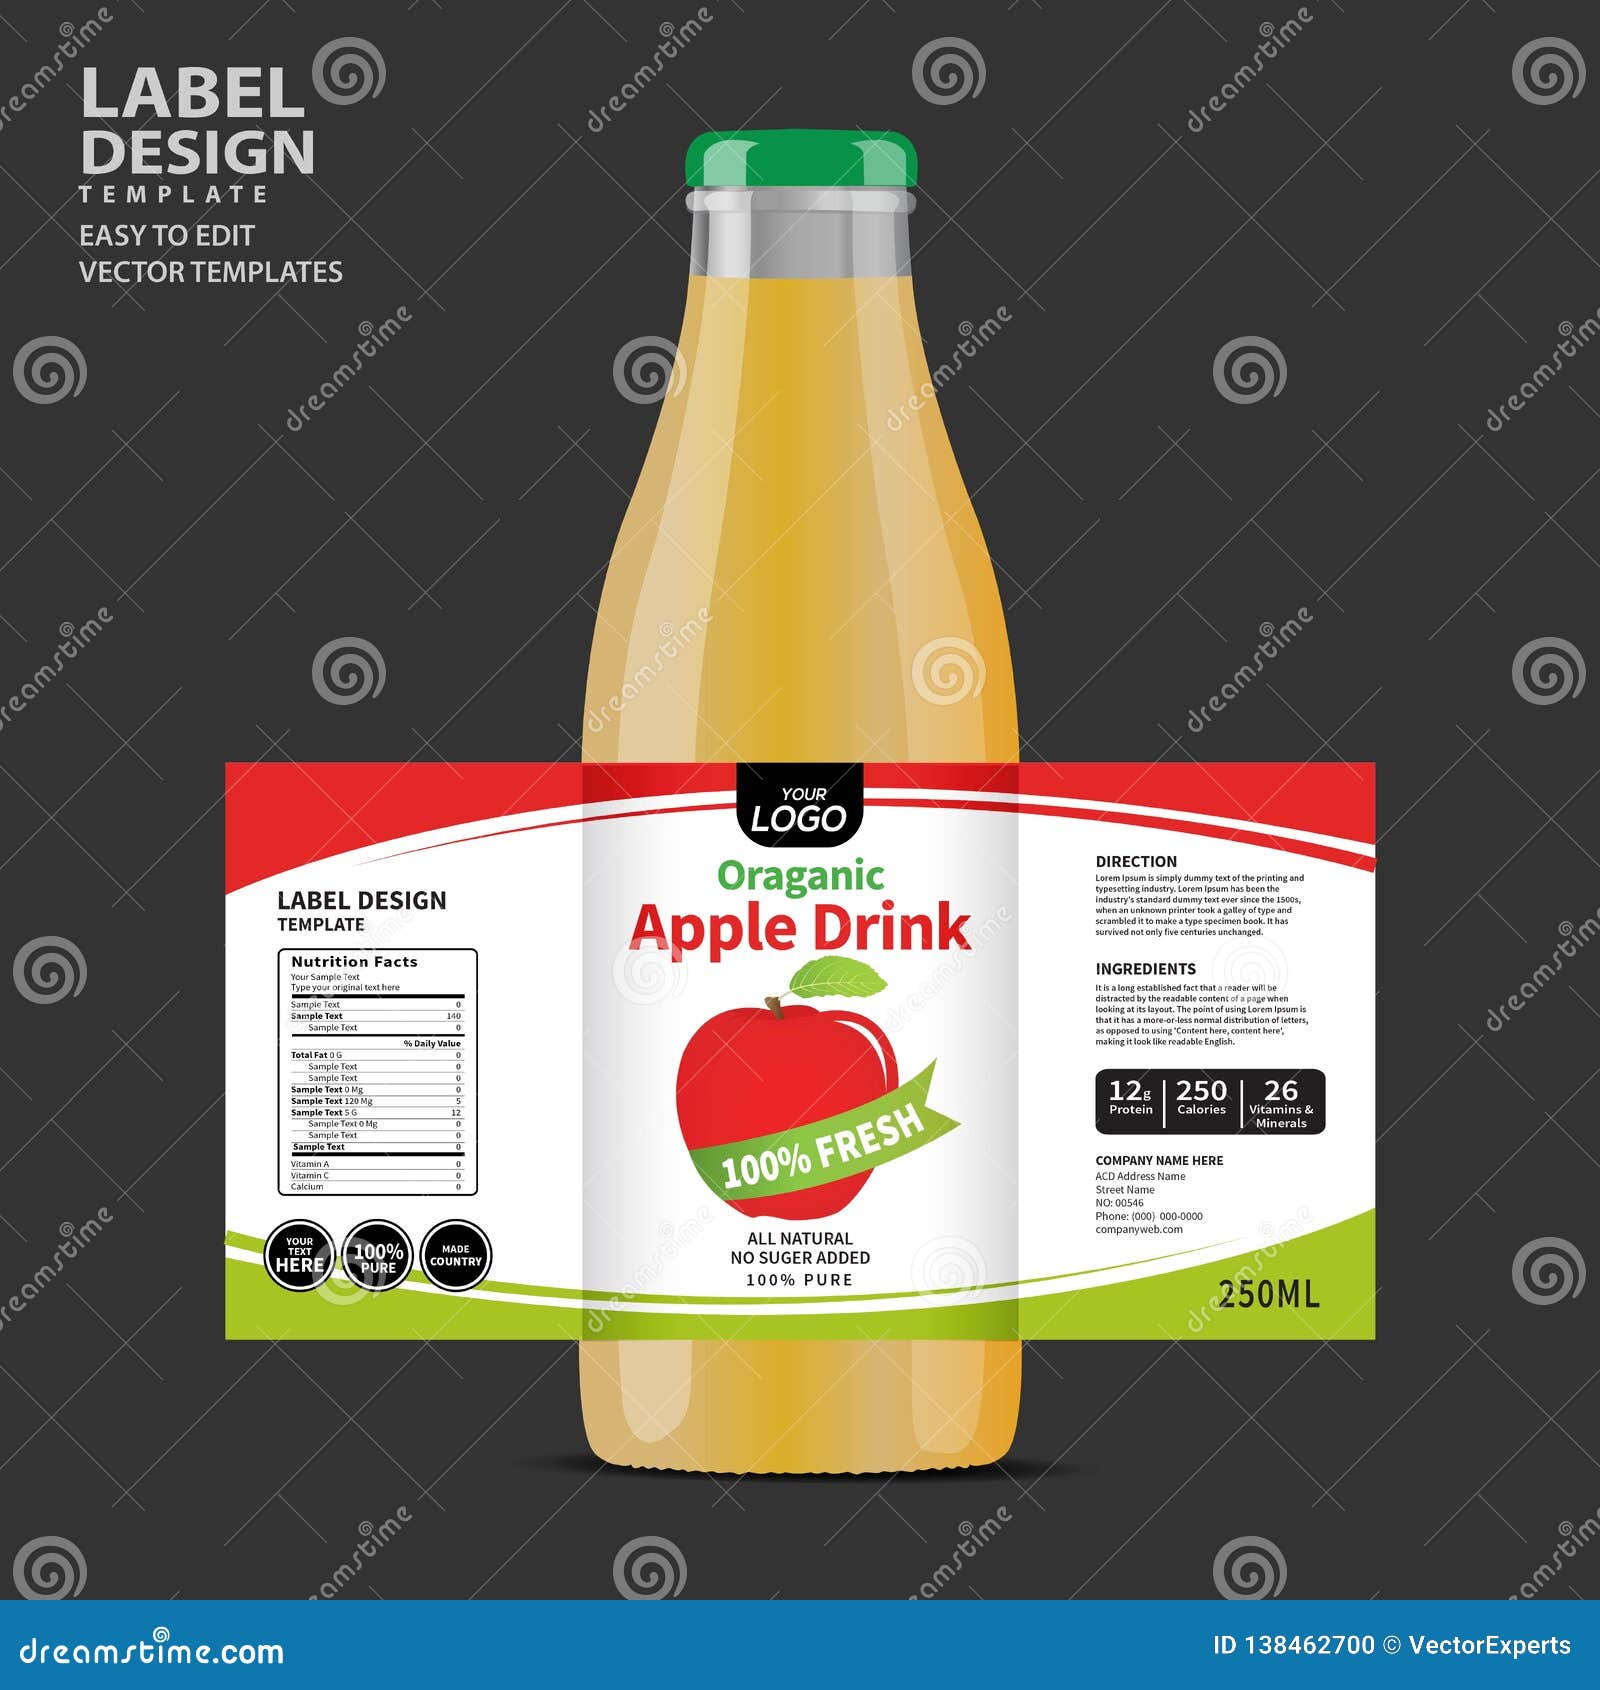 Bottle Label, Package Template Design, Label Design, Mock Up With Regard To Template For Bottle Labels